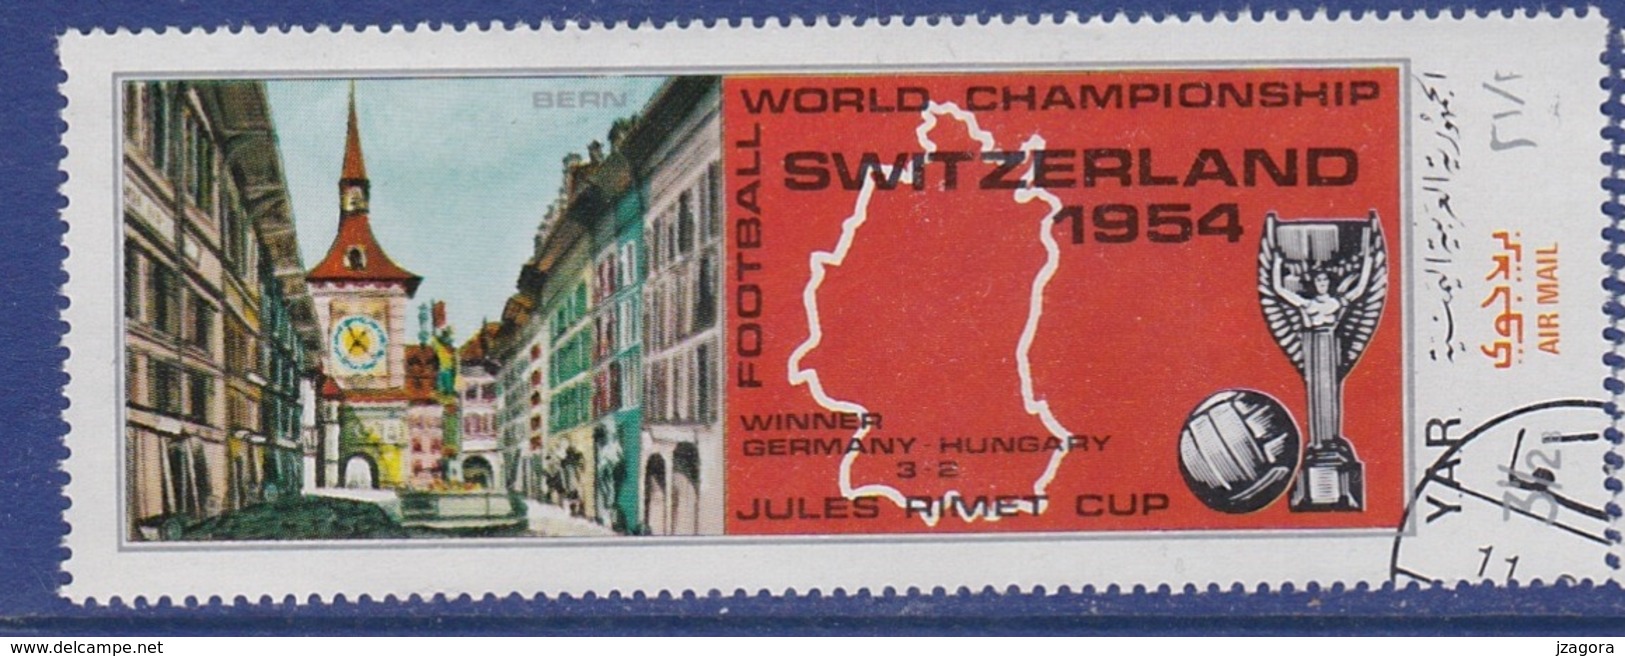 SOCCER FOOTBALL WORLD CHAMPIONSHIP MUNDIAL SWITZERLAND 1954 - YAR YEMEN - 1954 – Svizzera